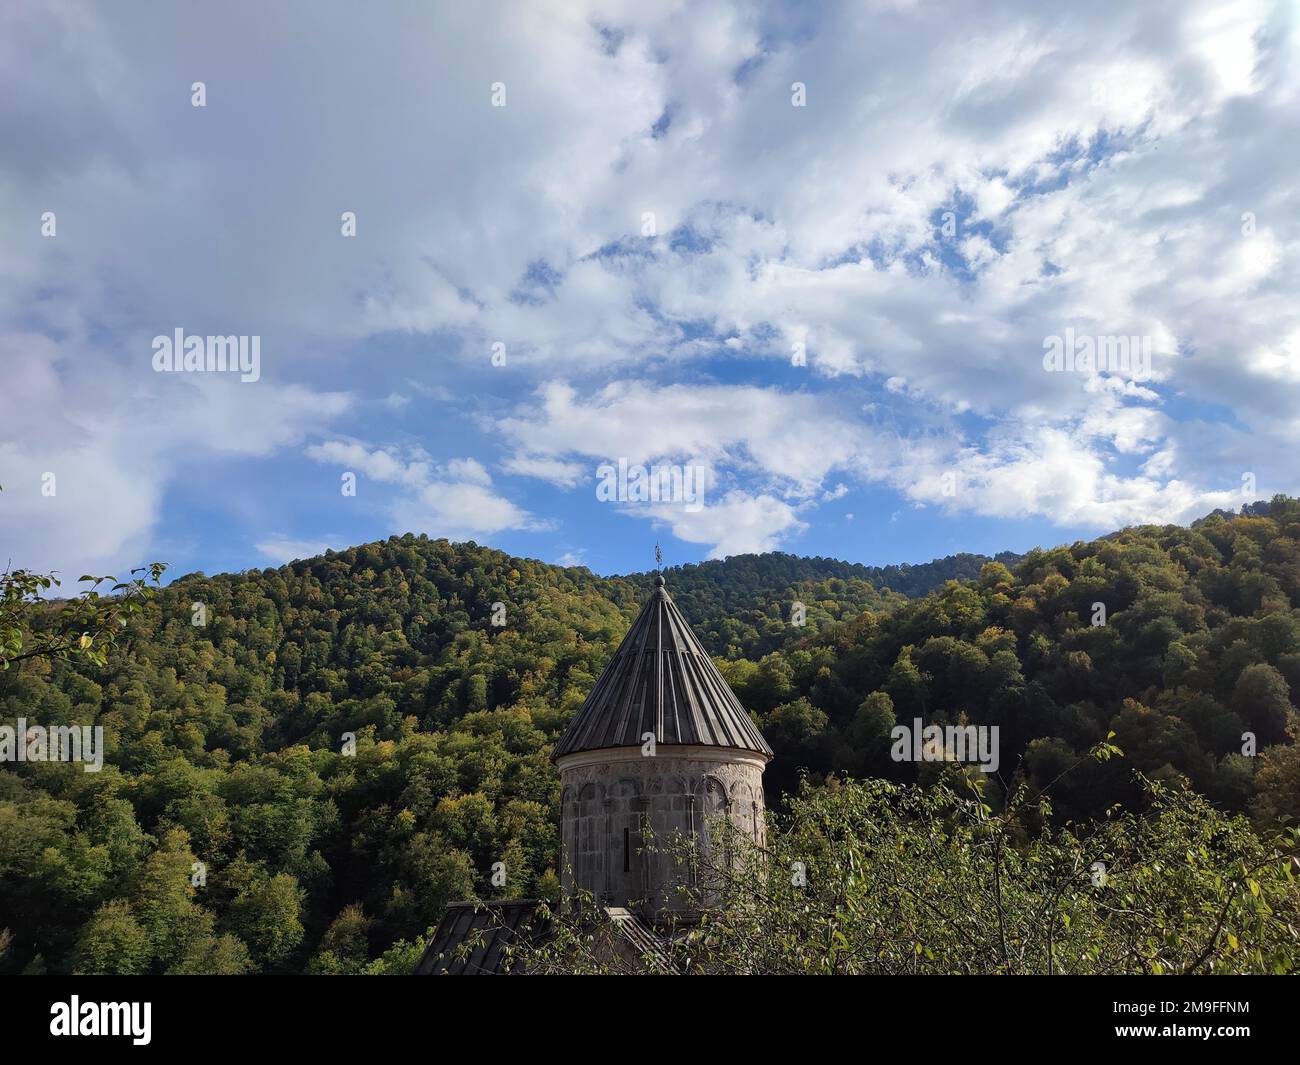 A scenic shot of the dome of the Haghartsin Monastery in Tavush, Armenia, seen behind lush trees Stock Photo